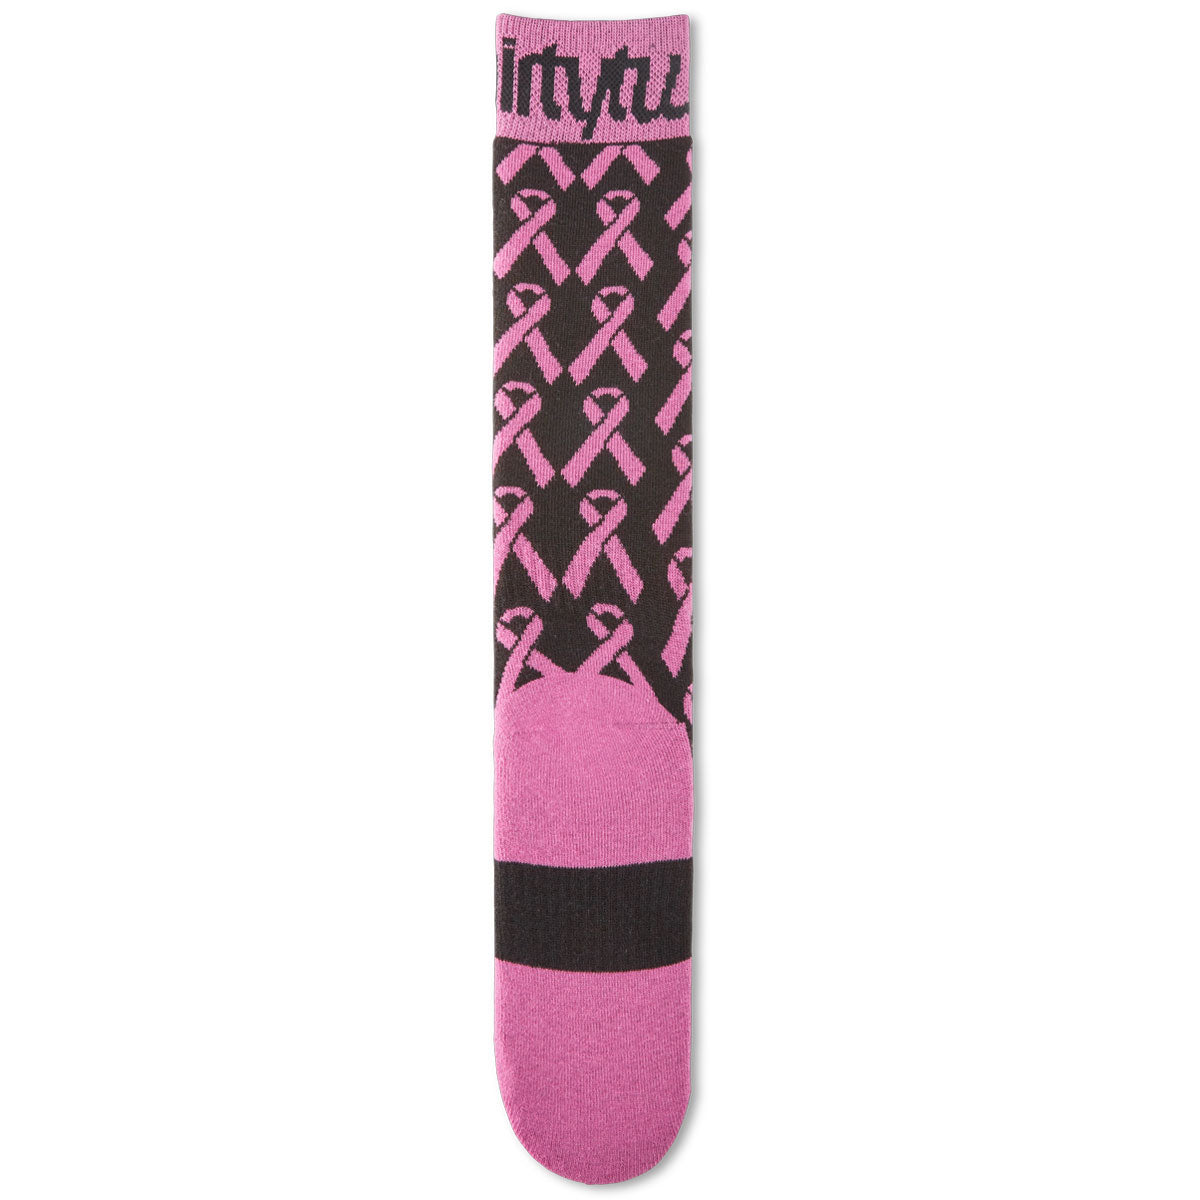 Thirty Two Womens B4bc Merino Snowboard Socks - Black/Pink image 3